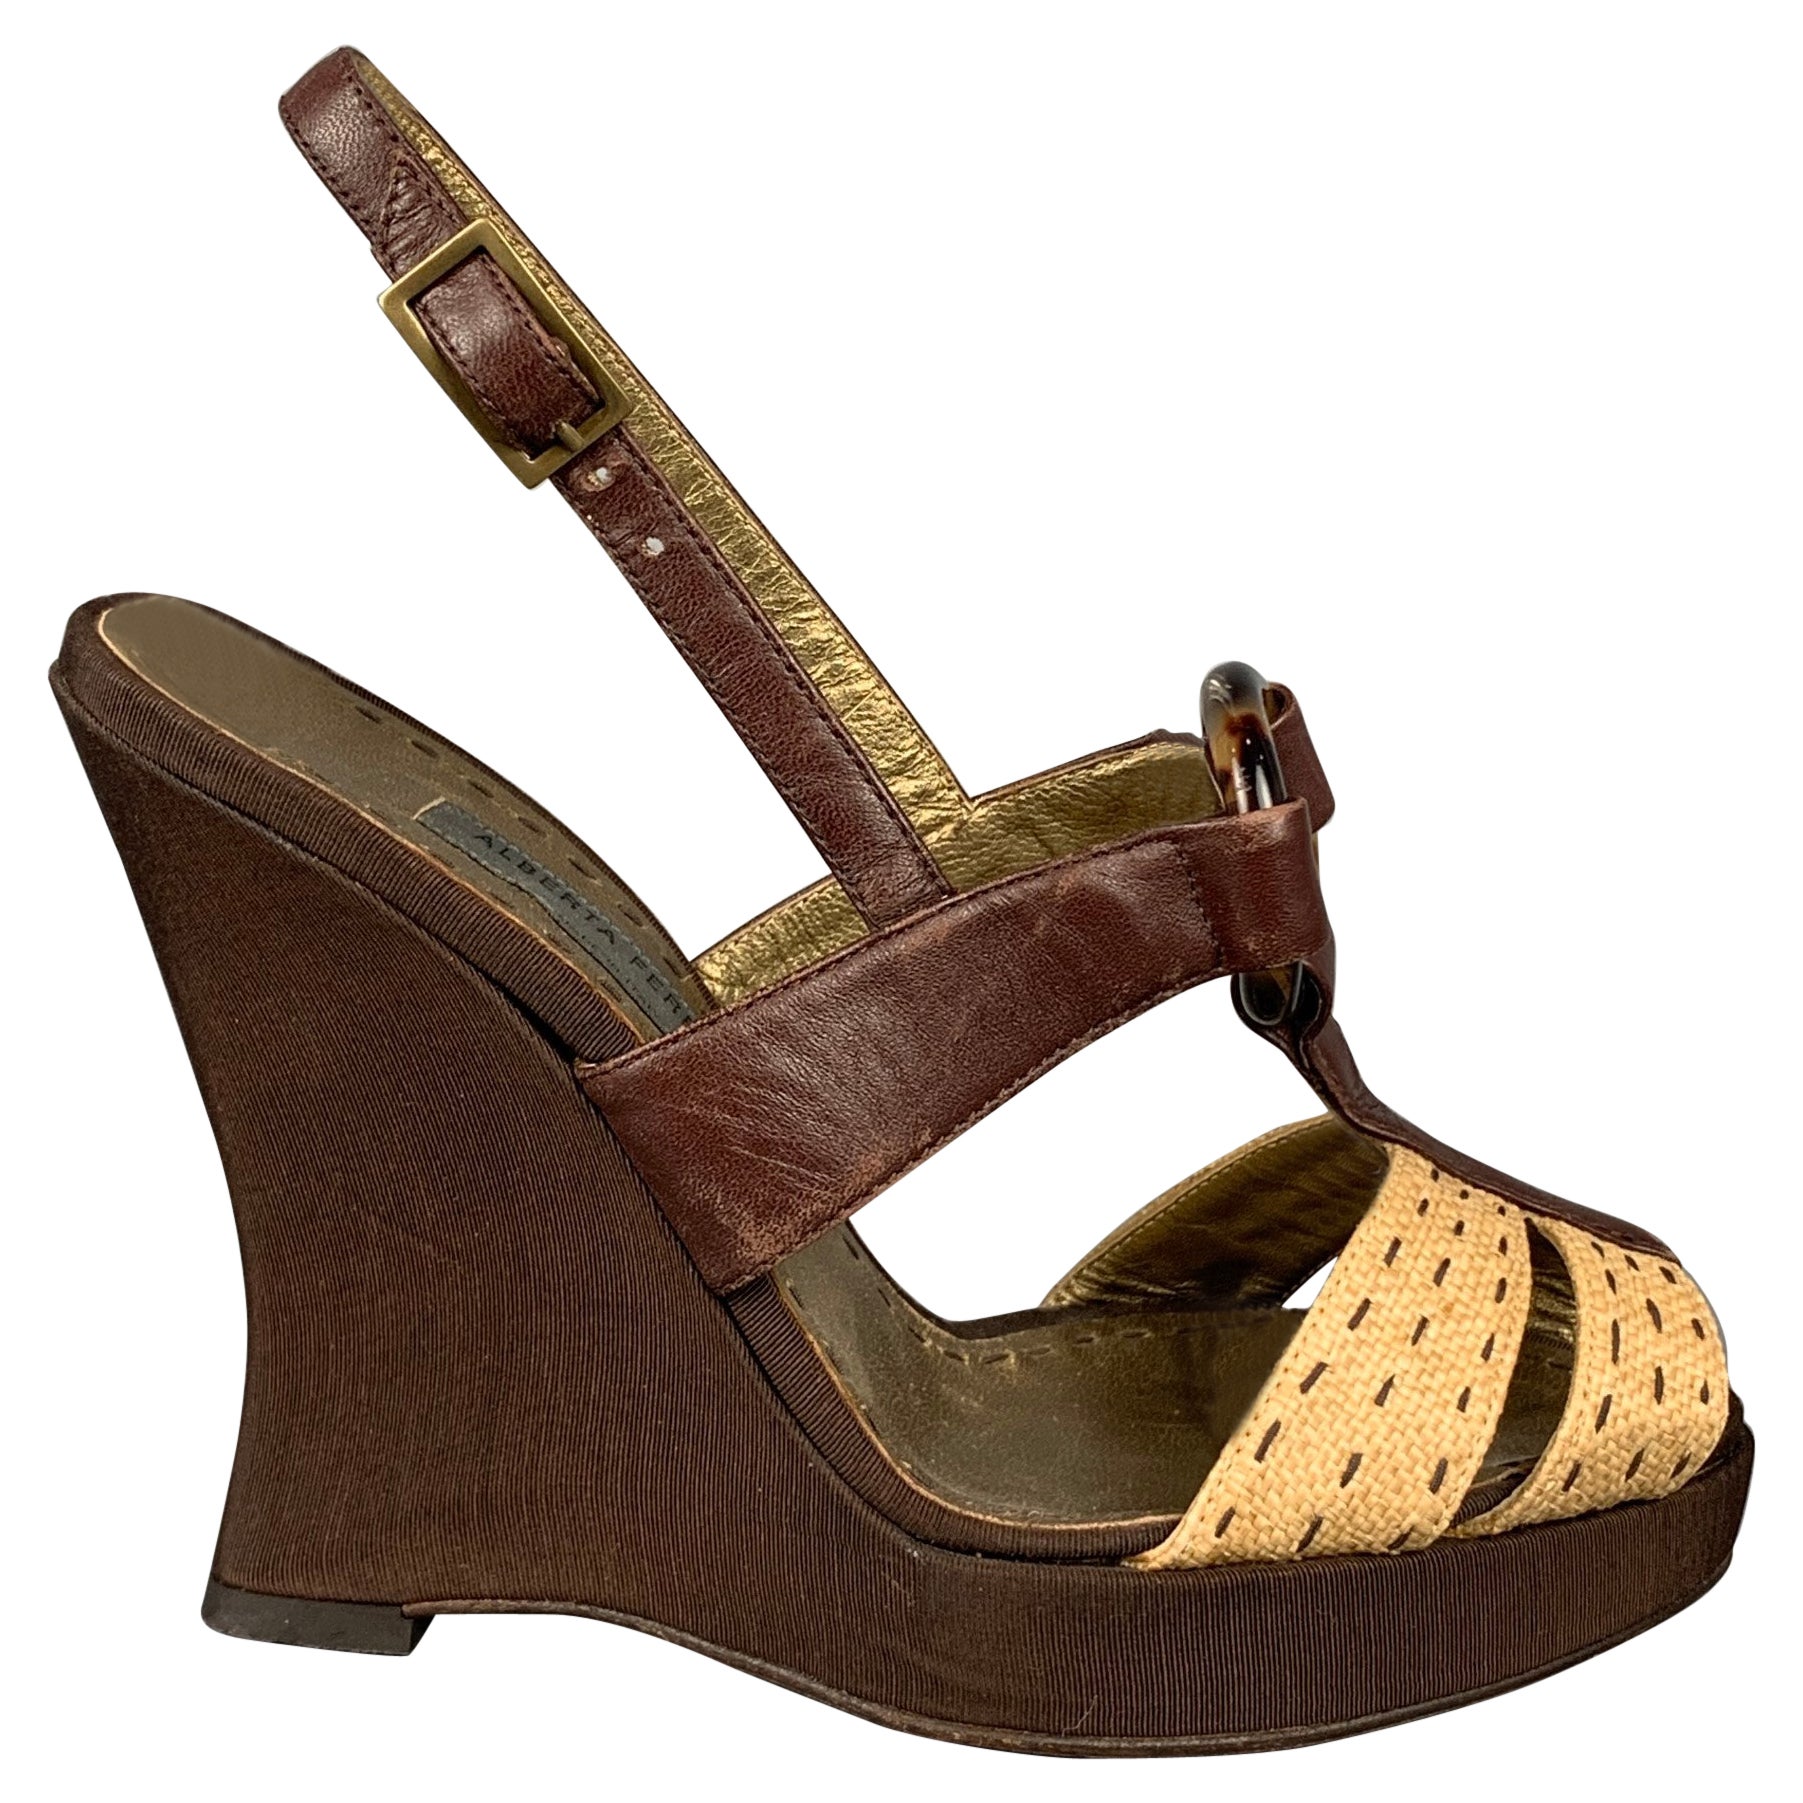 ALBERTA FERRETTI Size 6.5 Brown & Beige Silk Leather Wedge Sandals